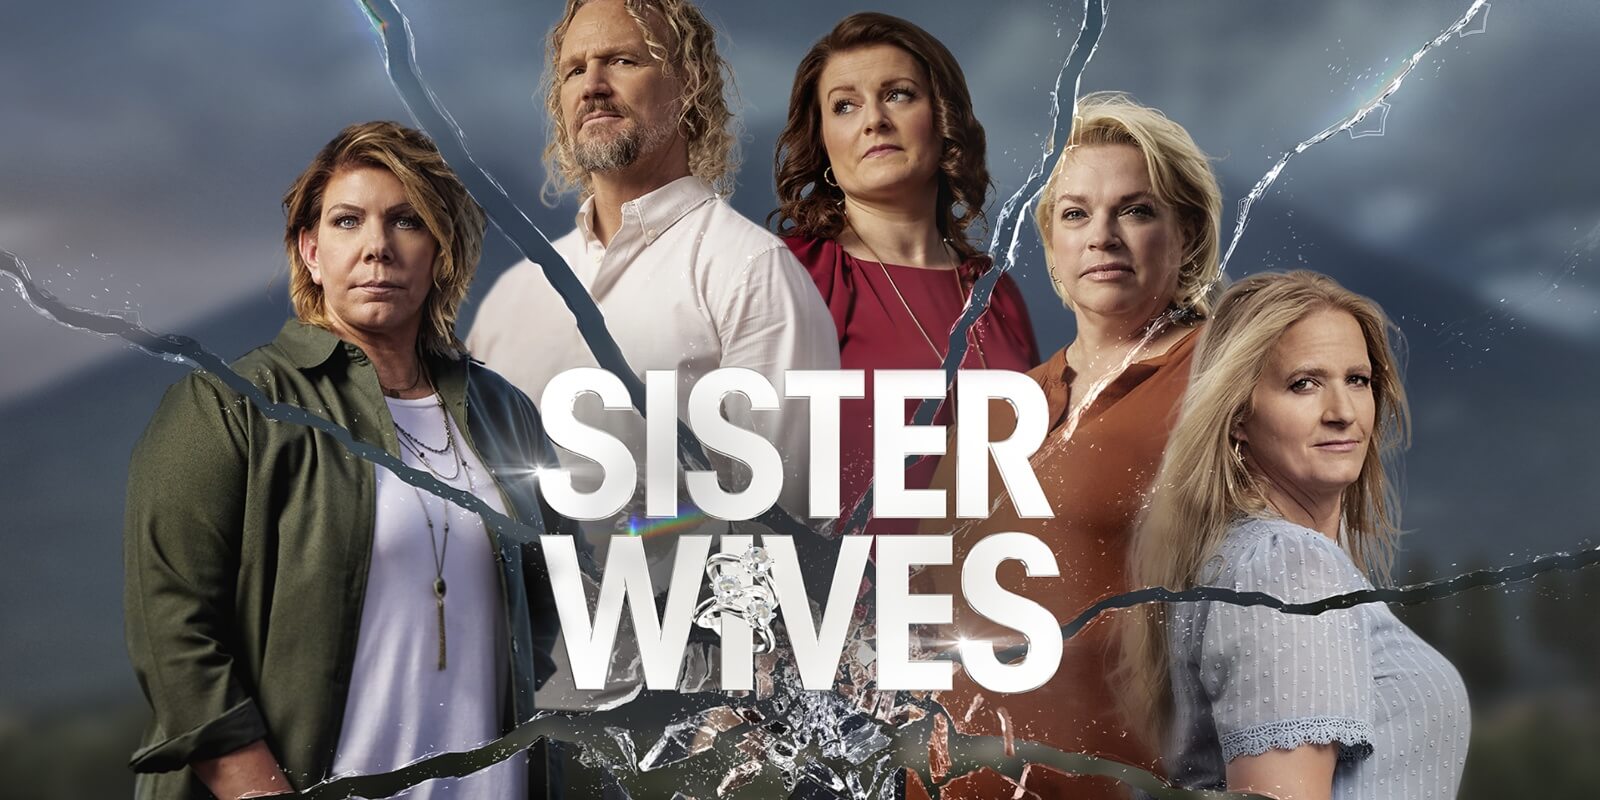 'Sister Wives' season 18 stars Meri, Kody, Robyn, Janelle, and Christine Brown.